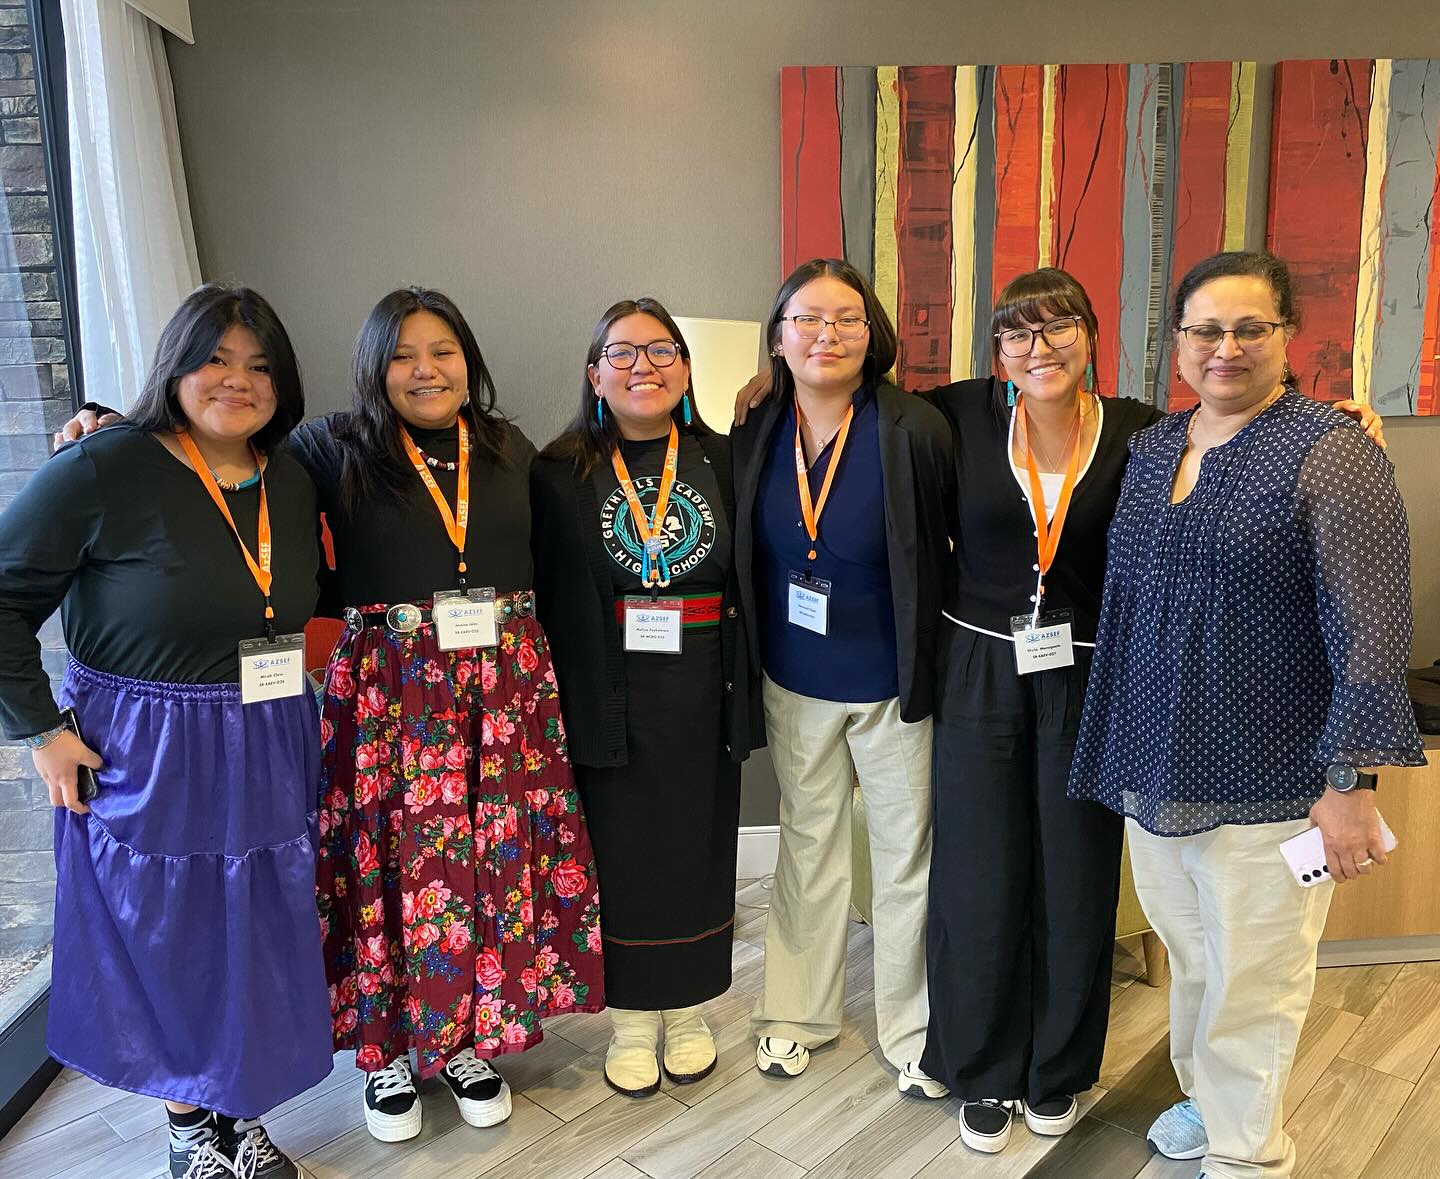 Greyhills Academy girls dominate Arizona science fair with impressive victories | Navajo-Hopi Observer